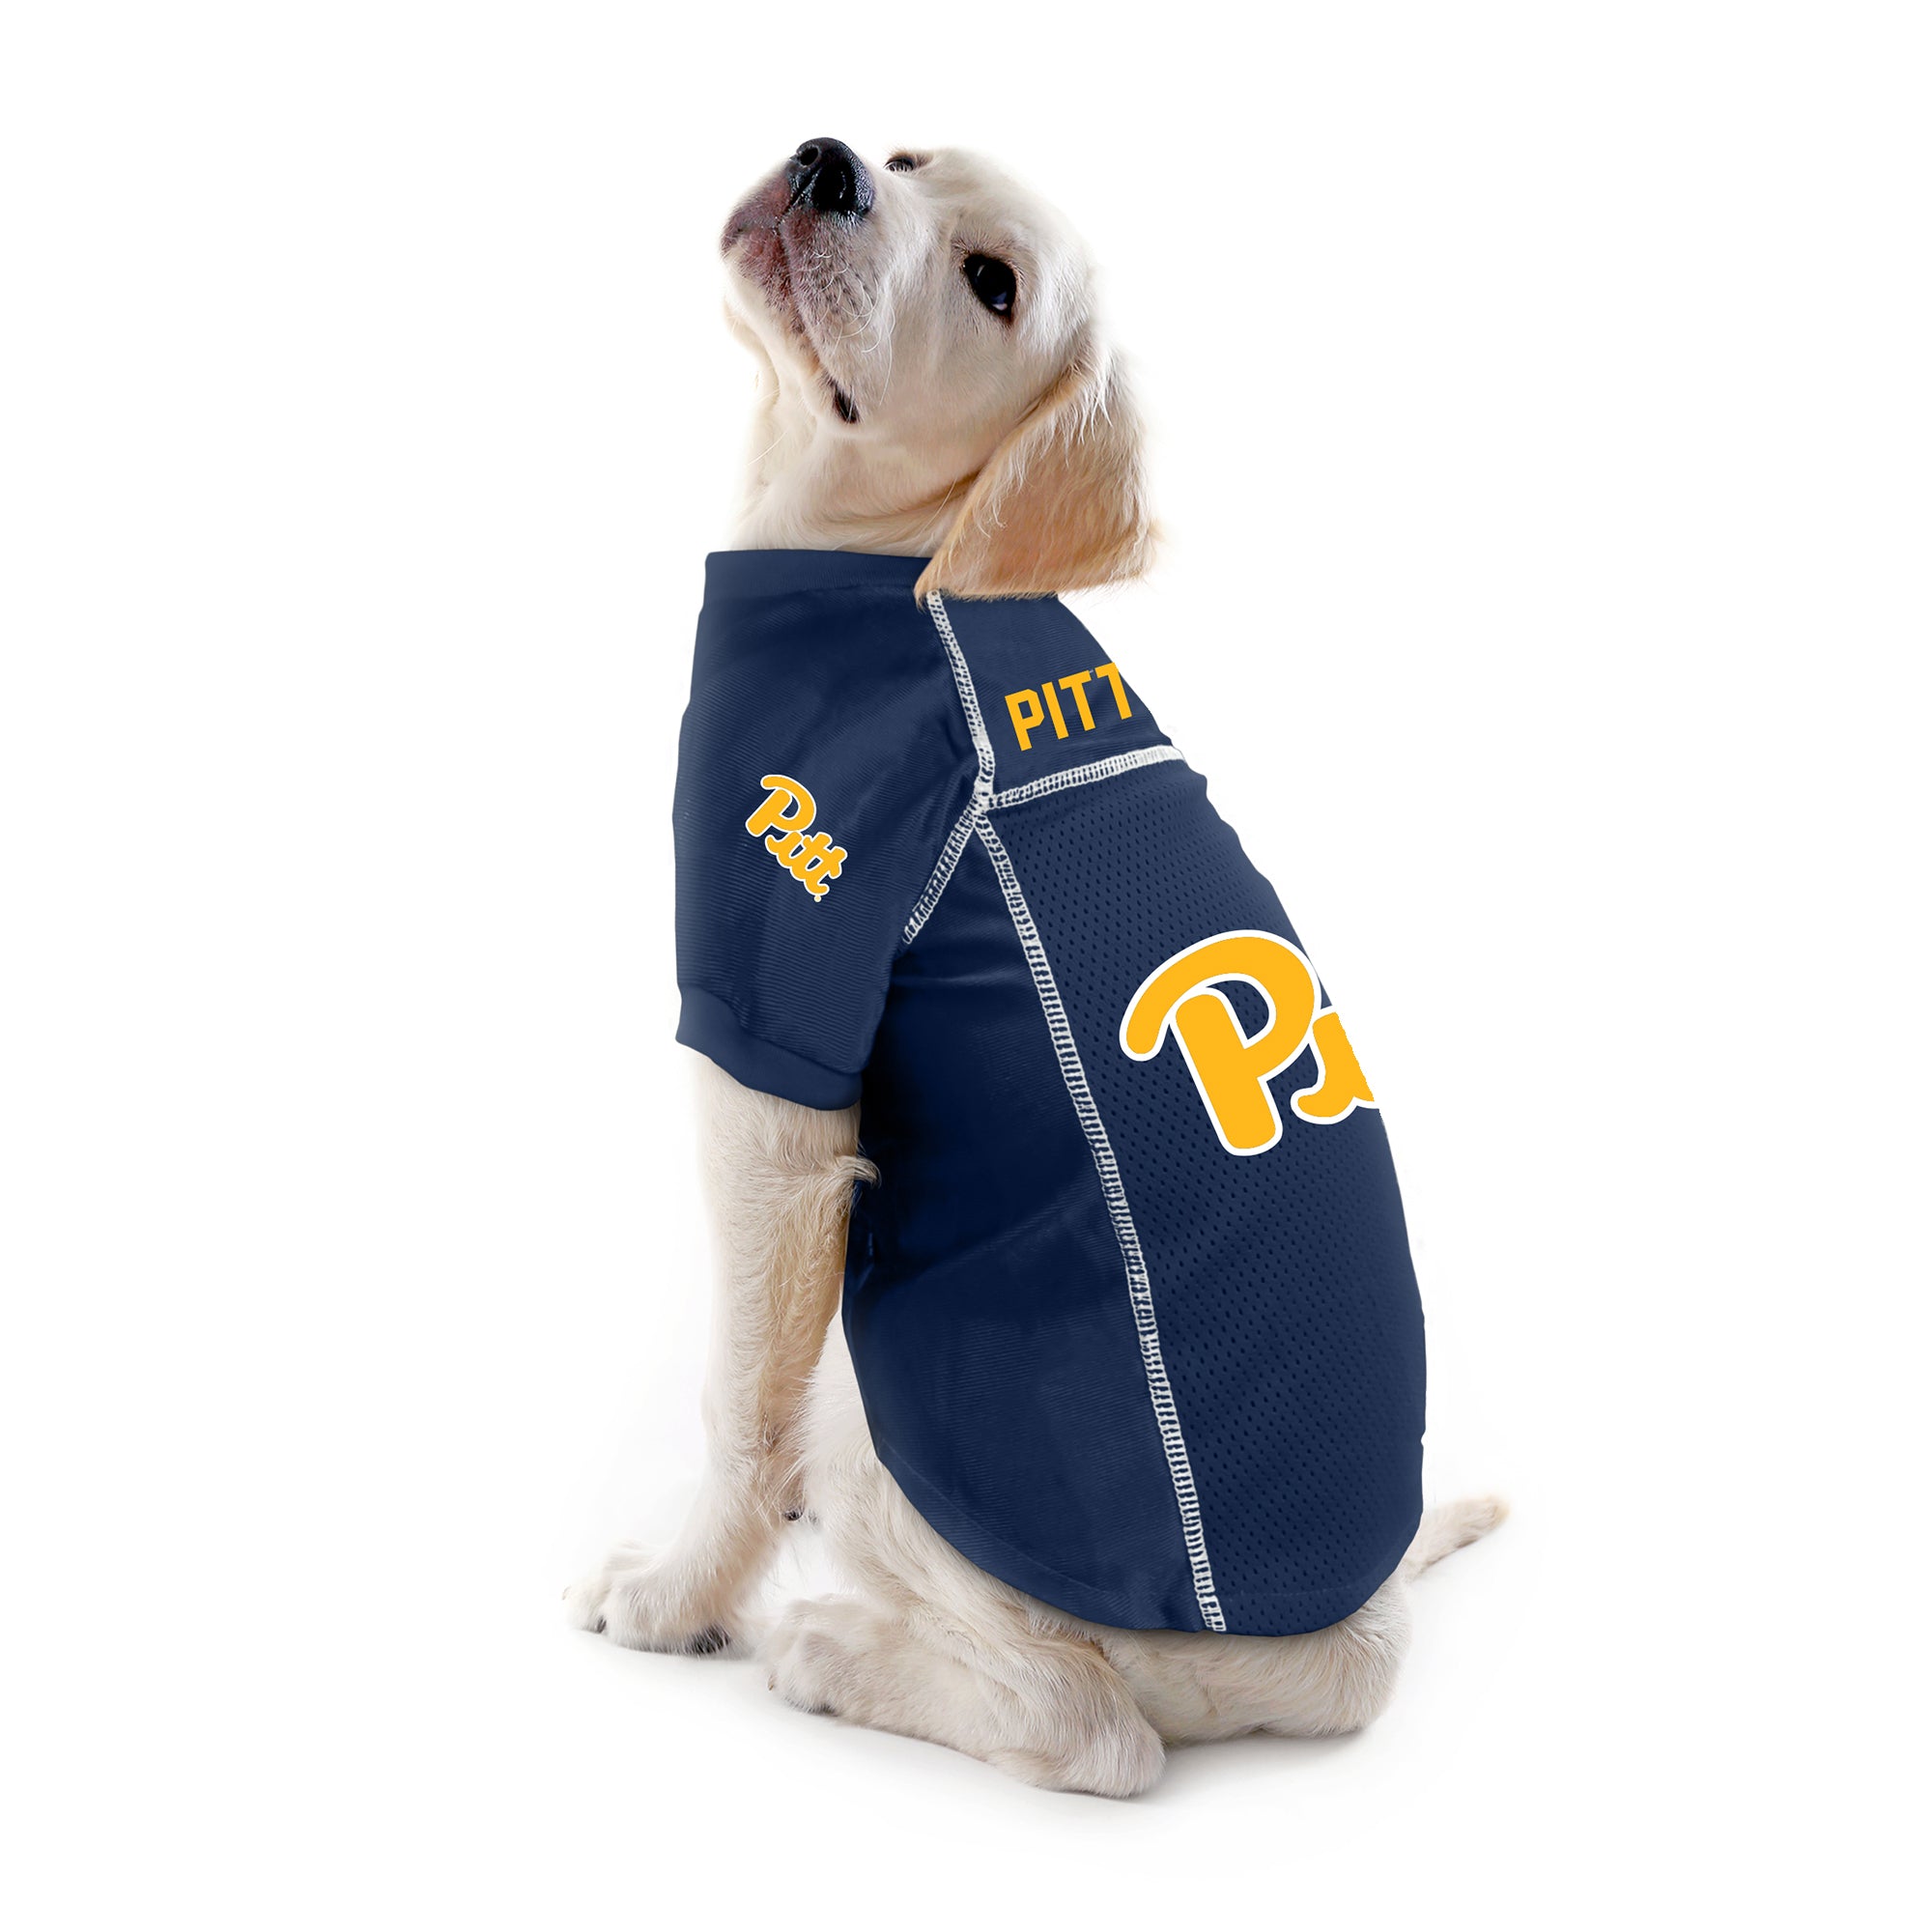 pittsburgh pirates dog shirt